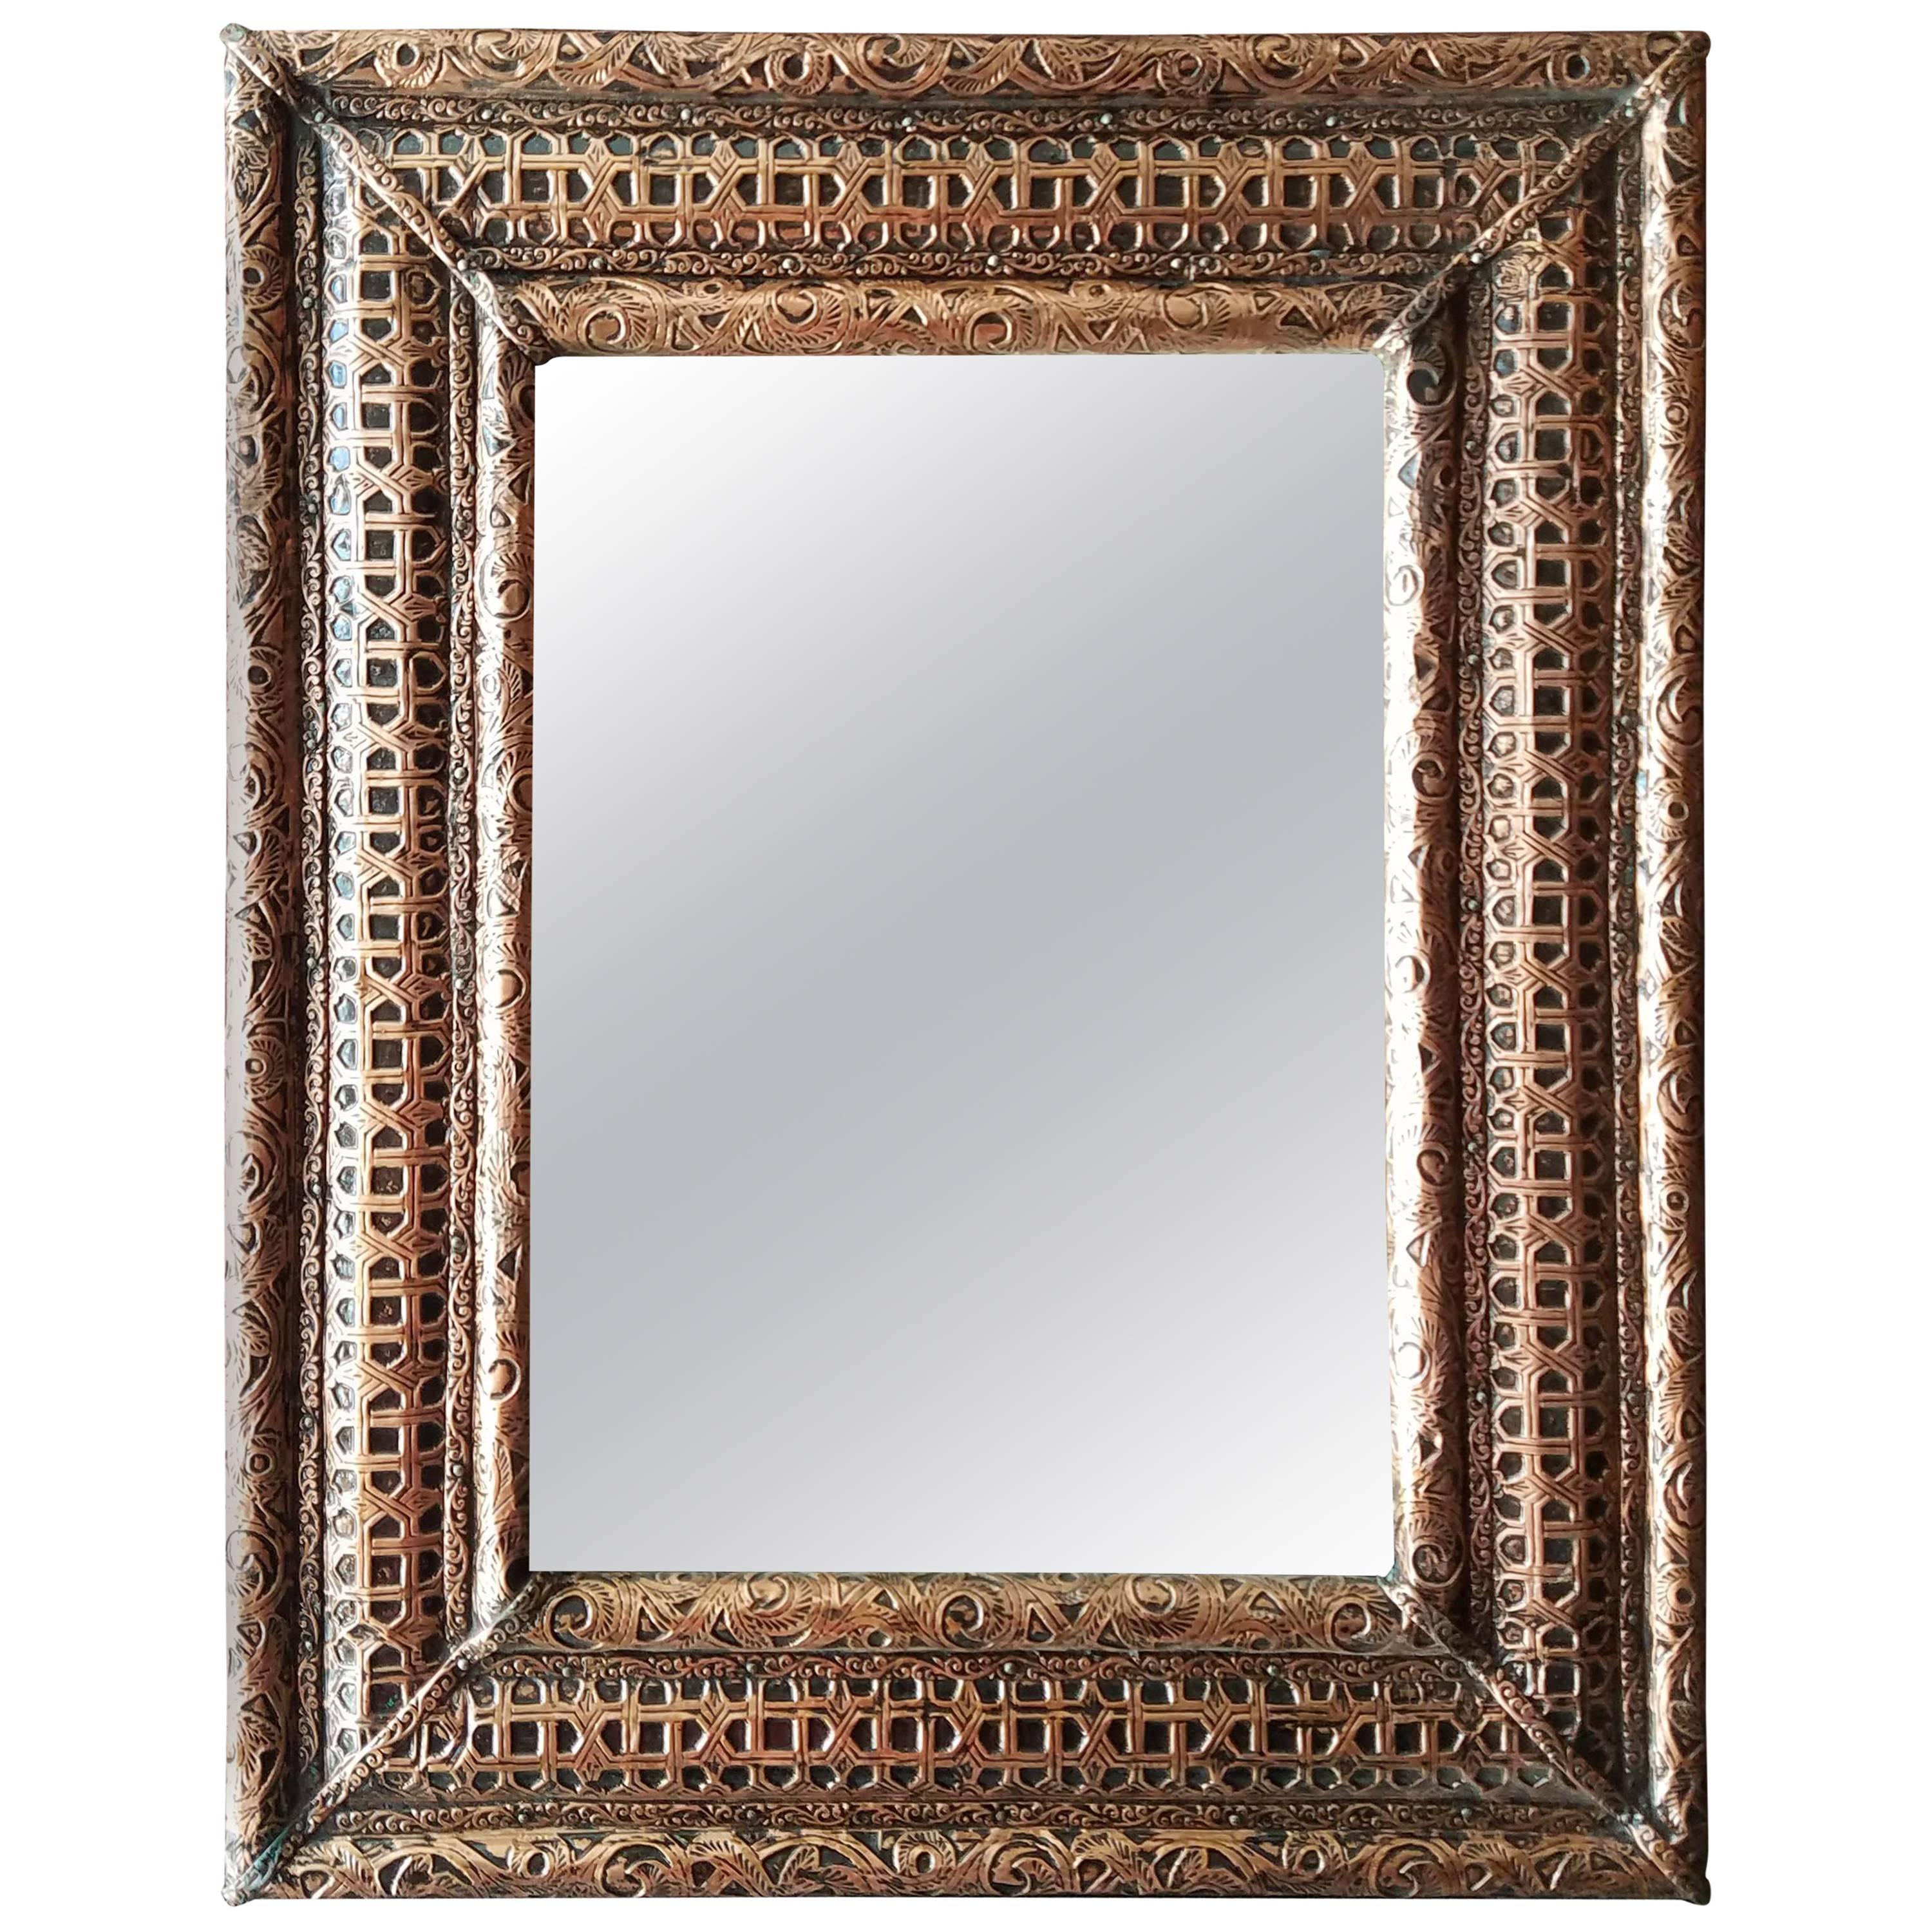 Copper Look Metal Inlaid Mirror, Rectangular For Sale